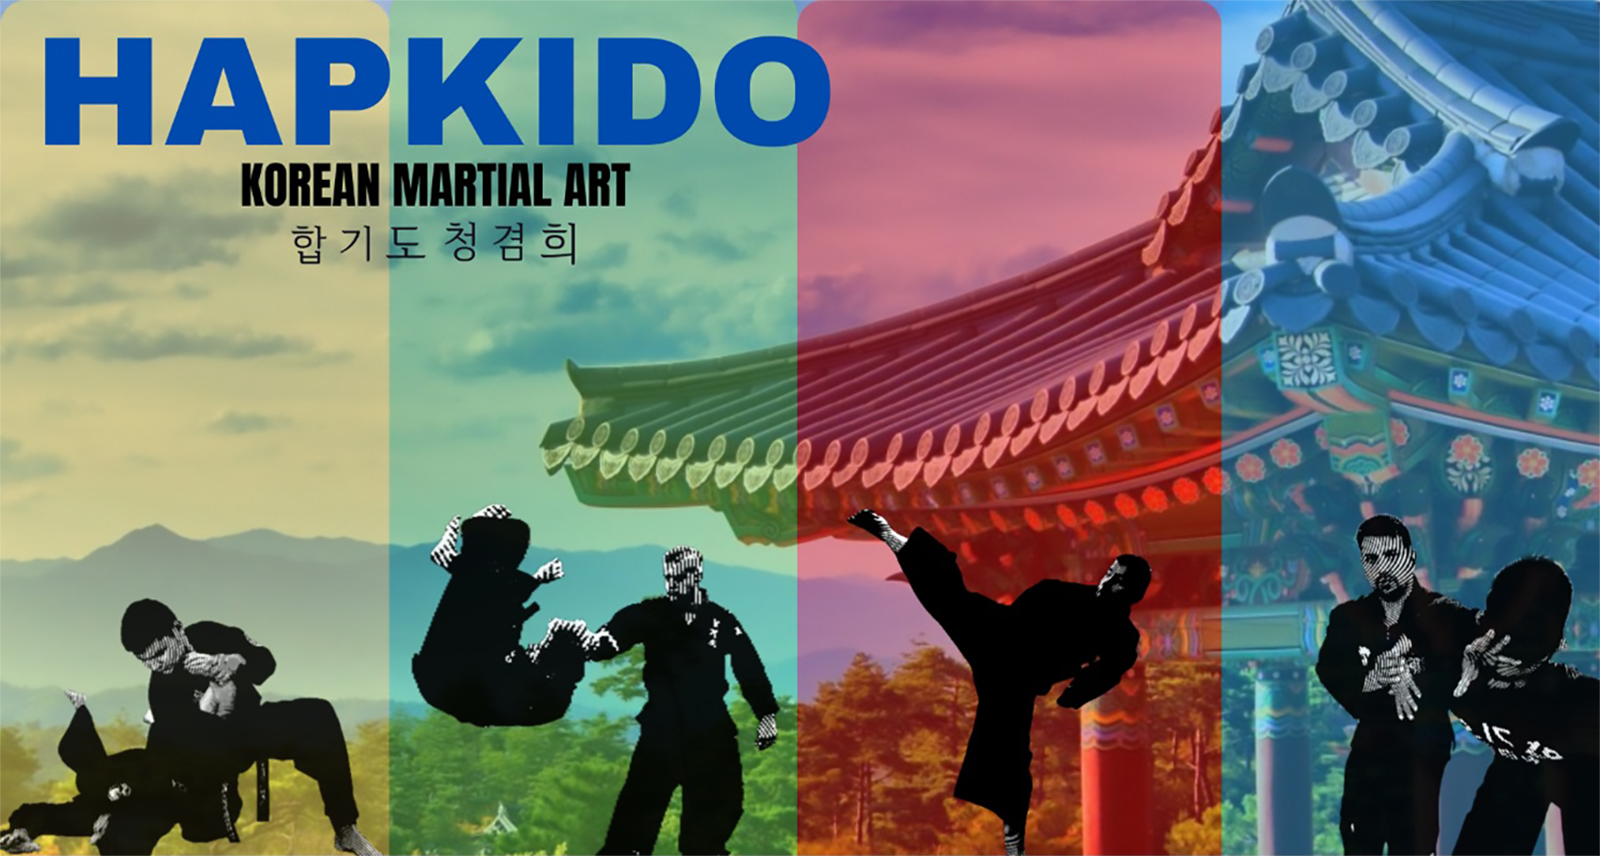 Korean Korean Martial Arts Hapkido 1600x856